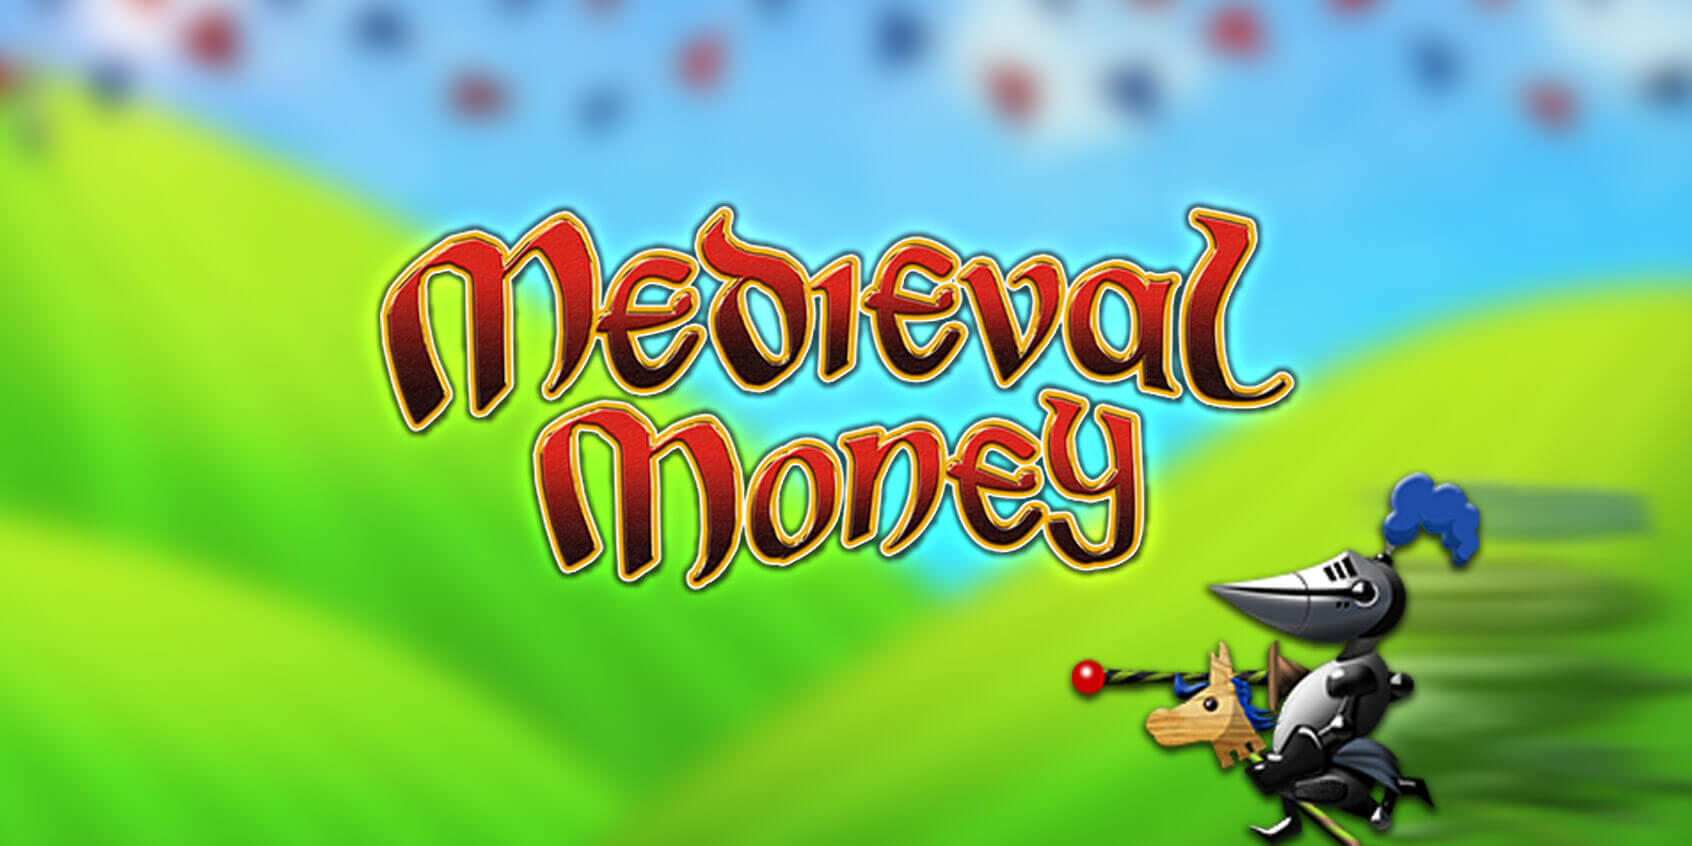 Medieval Money Slot